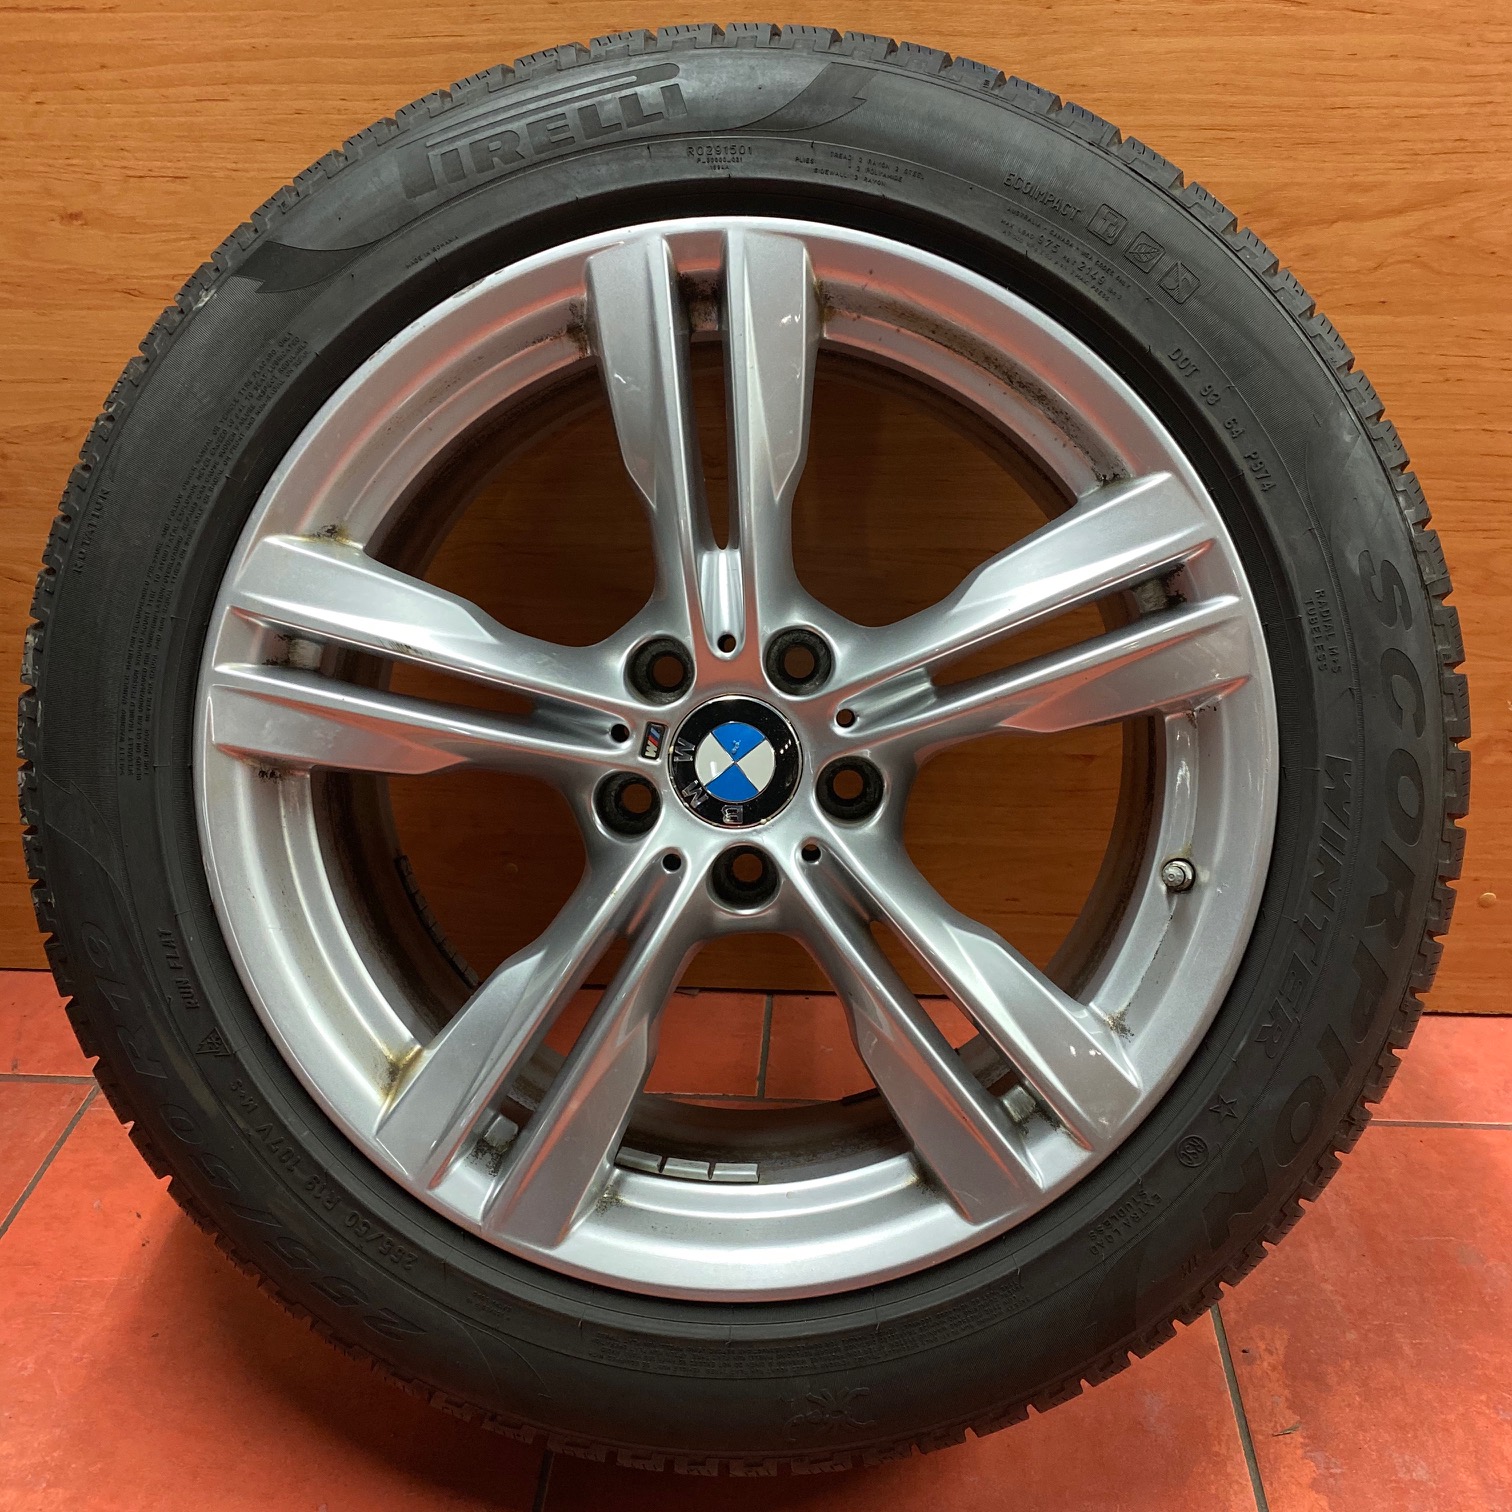 Zimní sada BMW X5 F15 STYLING M467 9x19 ET37 včetně pneumatik 255/50 R19 107V Pirelli Winter , profil 6mm a čidel tlaku RDC